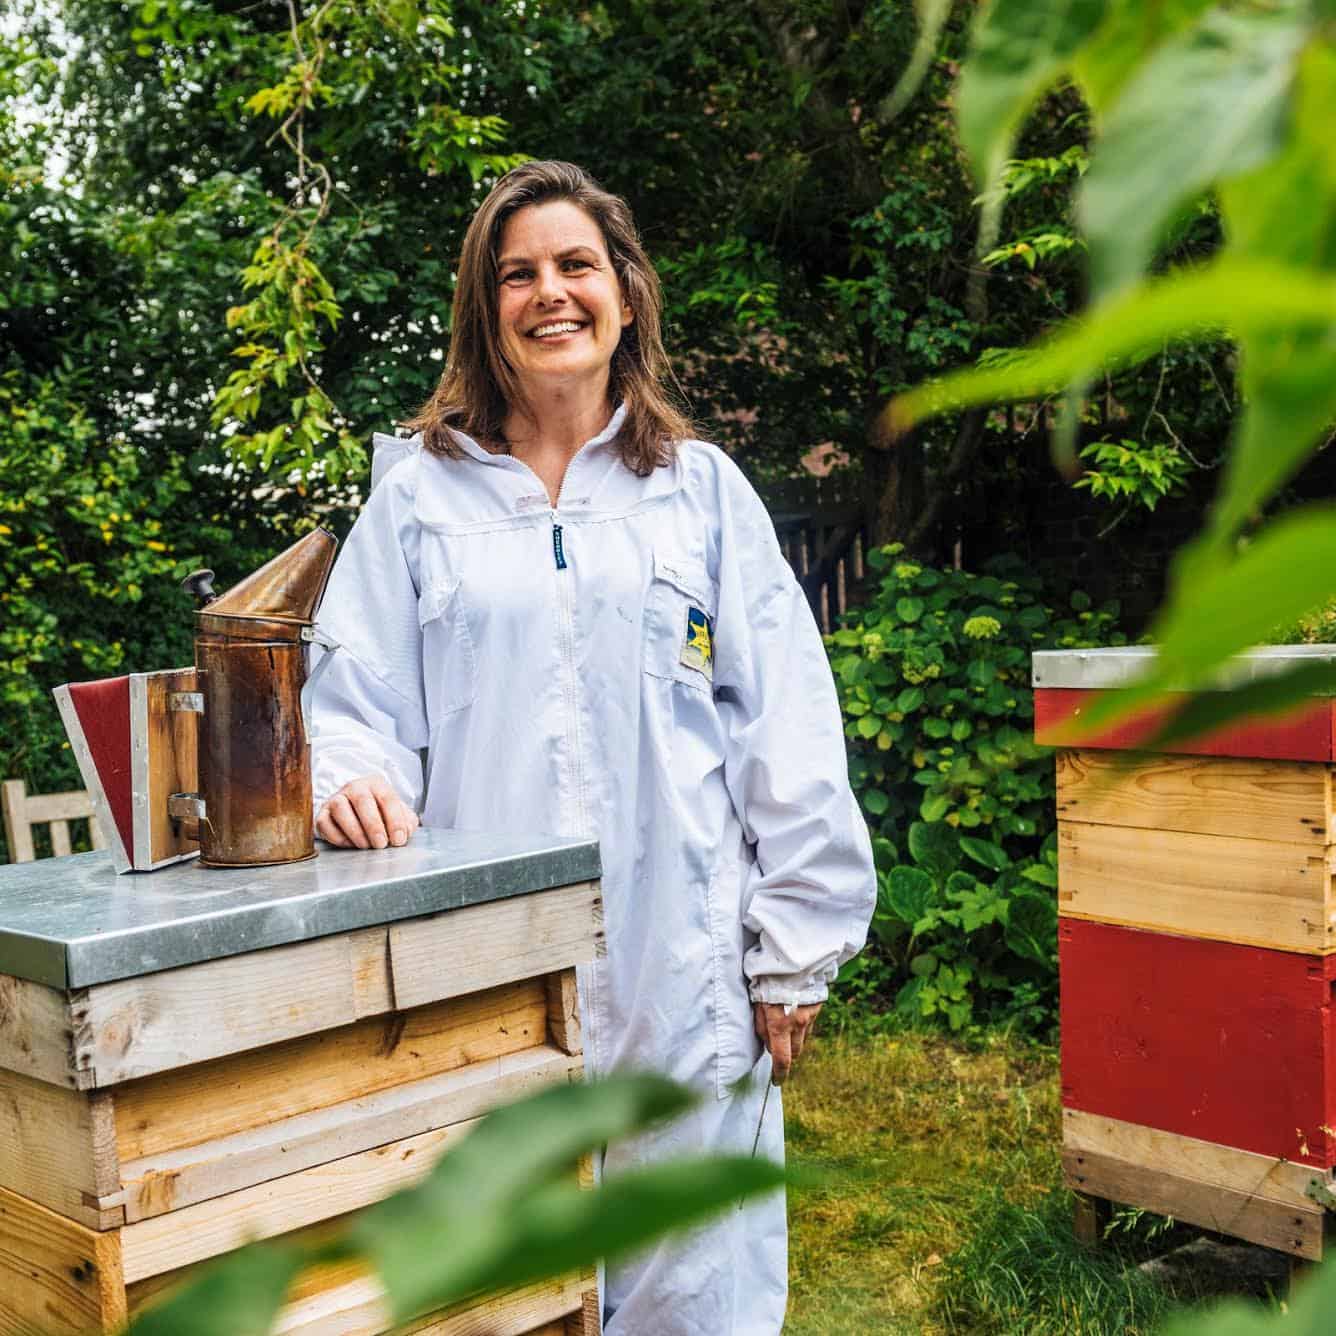 Abbott helps local British beekeepers